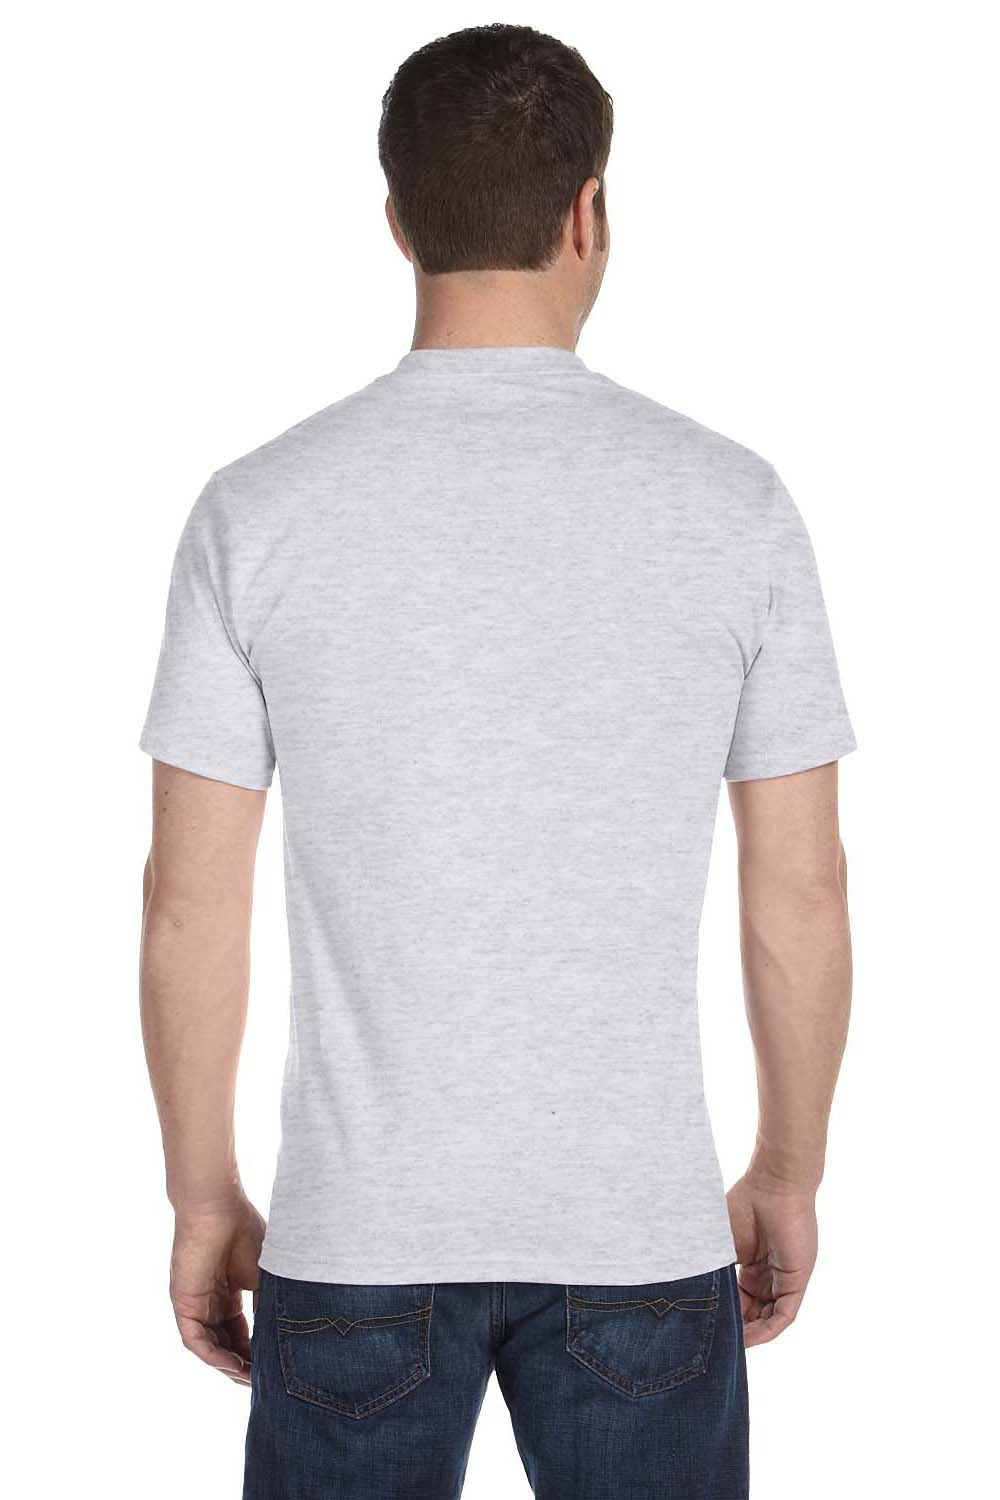 Hanes 5280 Mens ComfortSoft Short Sleeve Crewneck T-Shirt Ash Grey Back